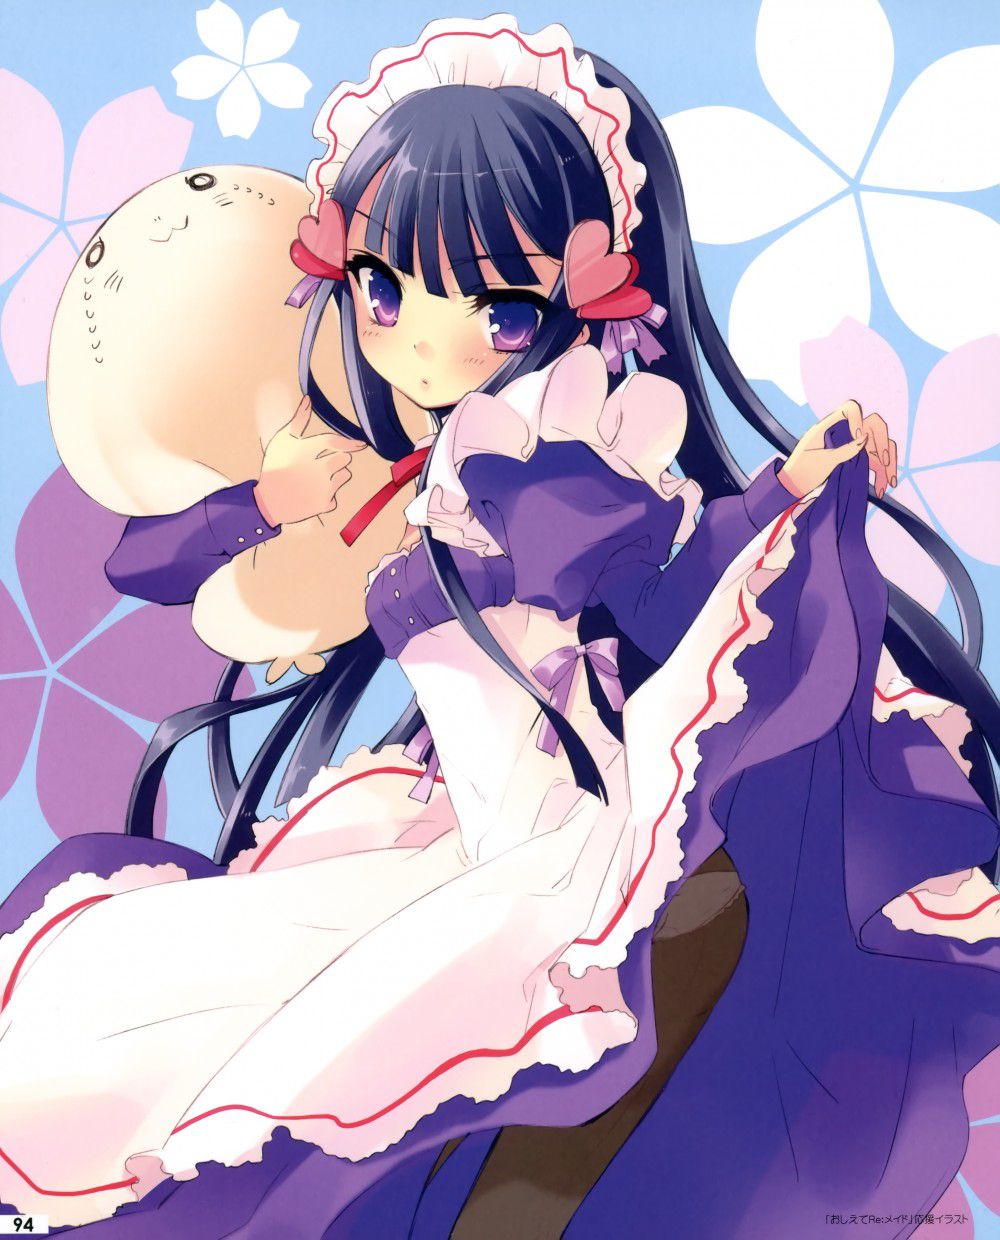 Second erotic image of maid 26